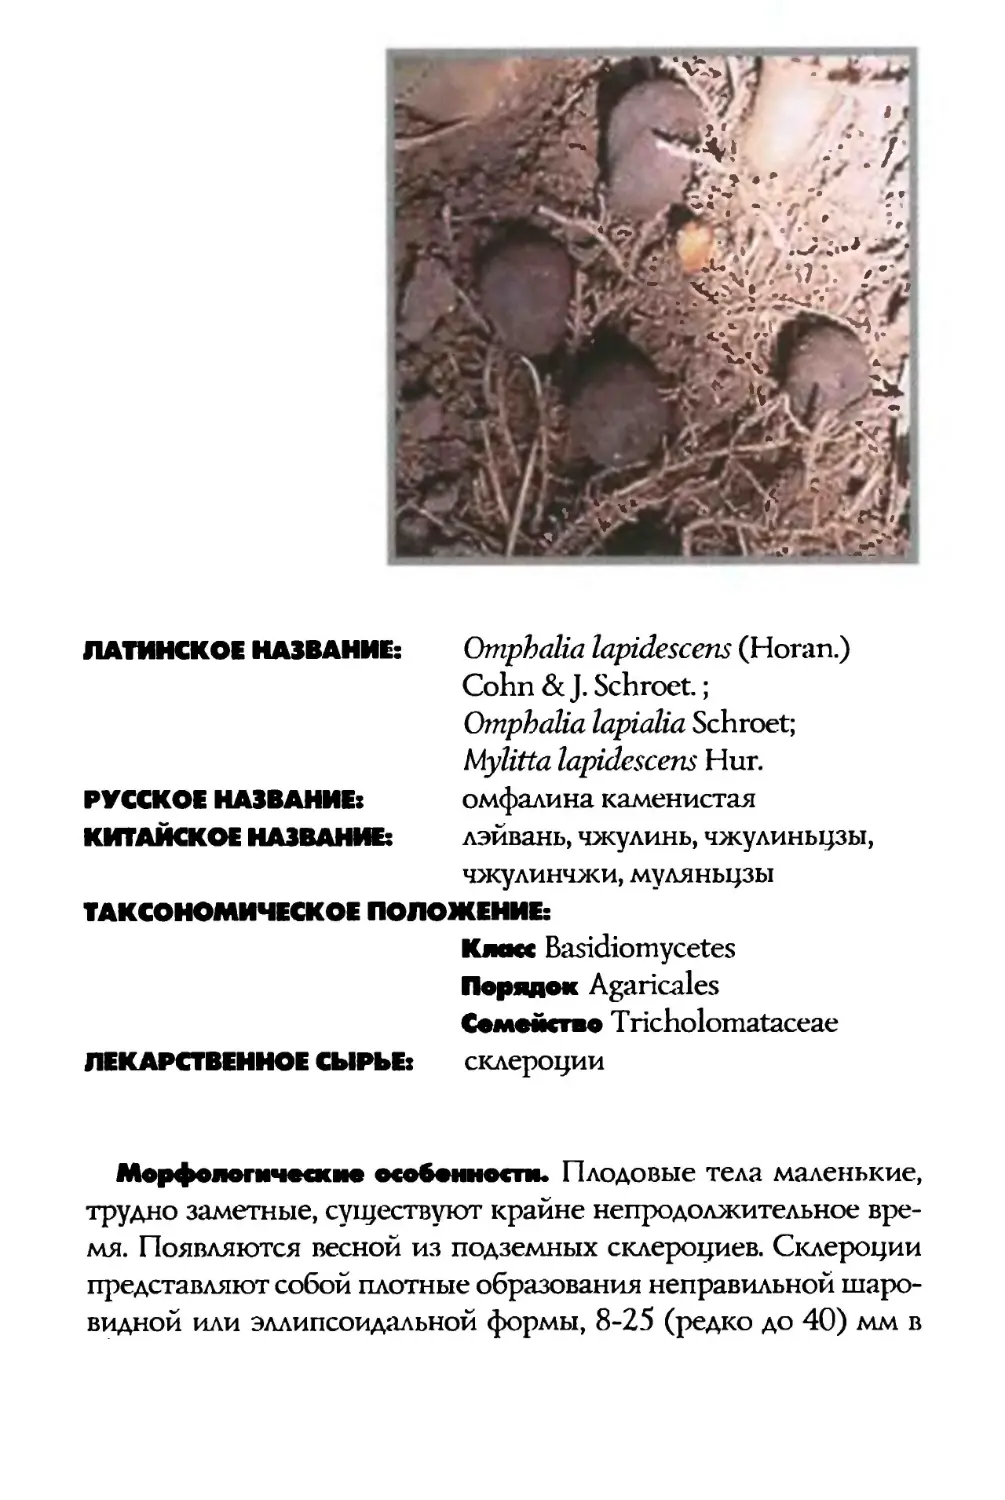 Omphalia lapidescens